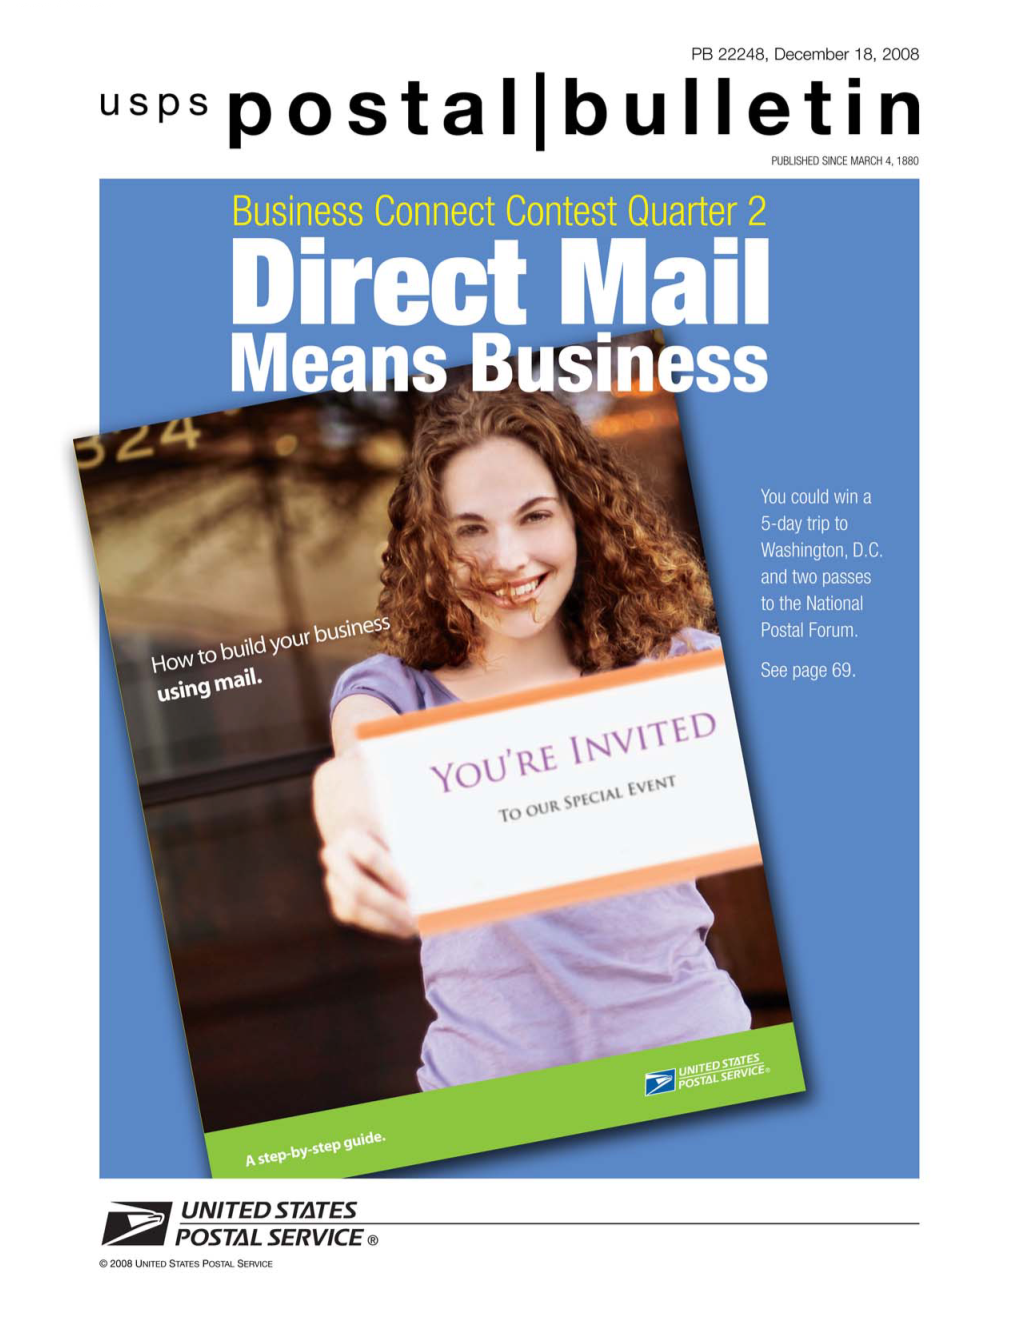 Postal Bulletin 22248 (12-18-08) Contents